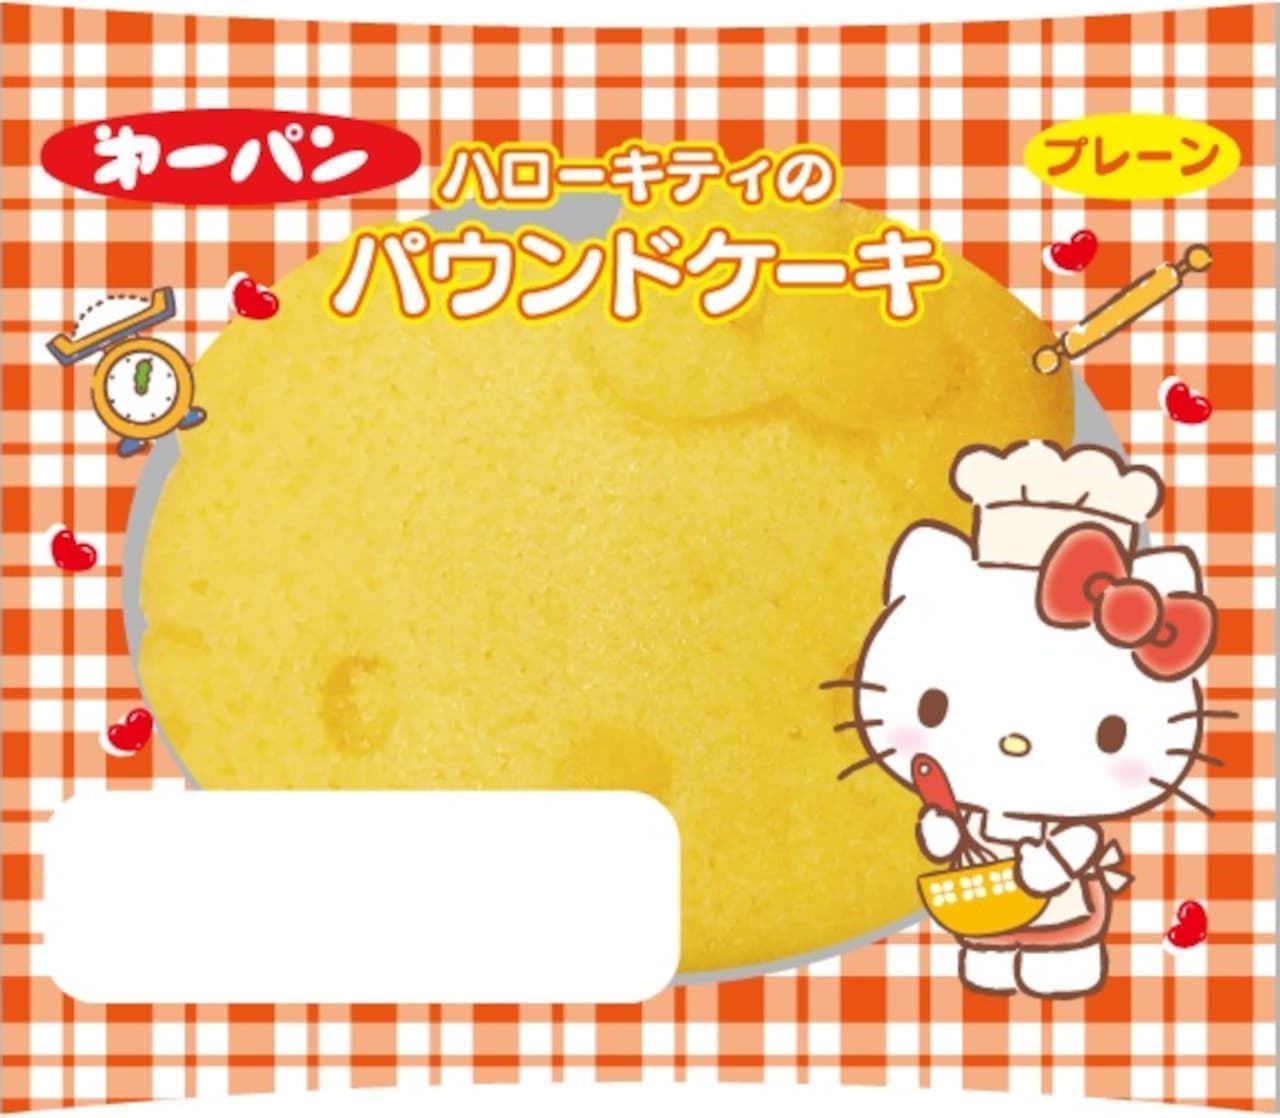 First bread "Hello Kitty pound cake"